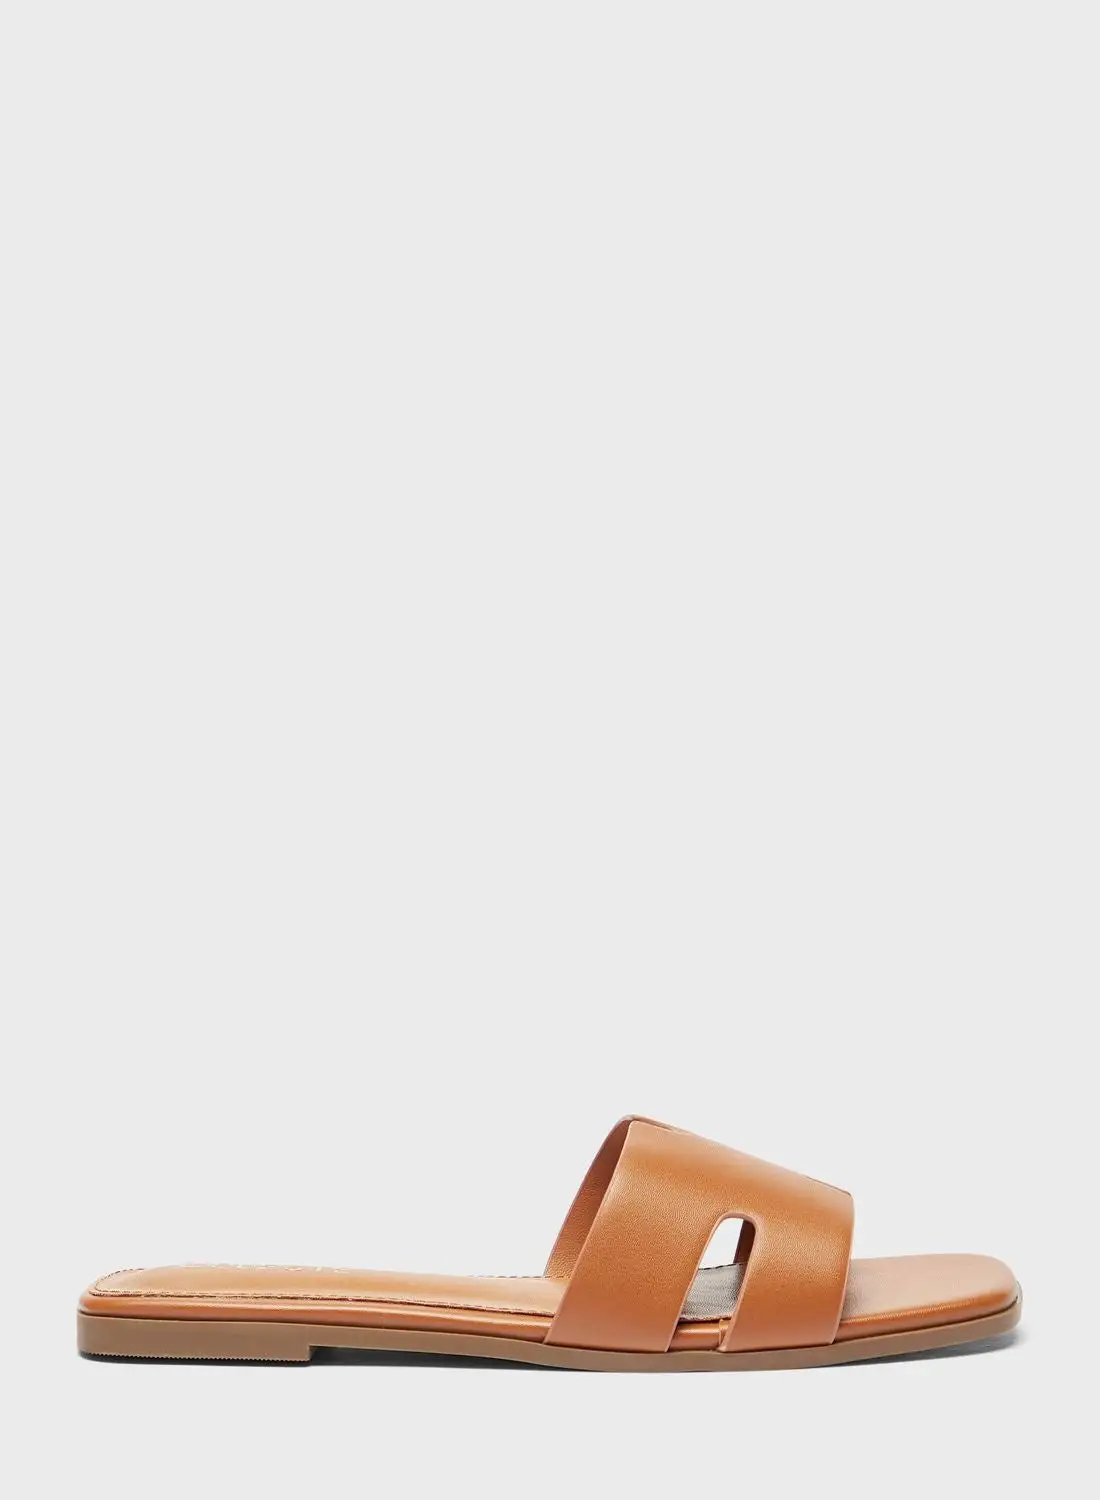 Celeste Single Strap Flat Sandals